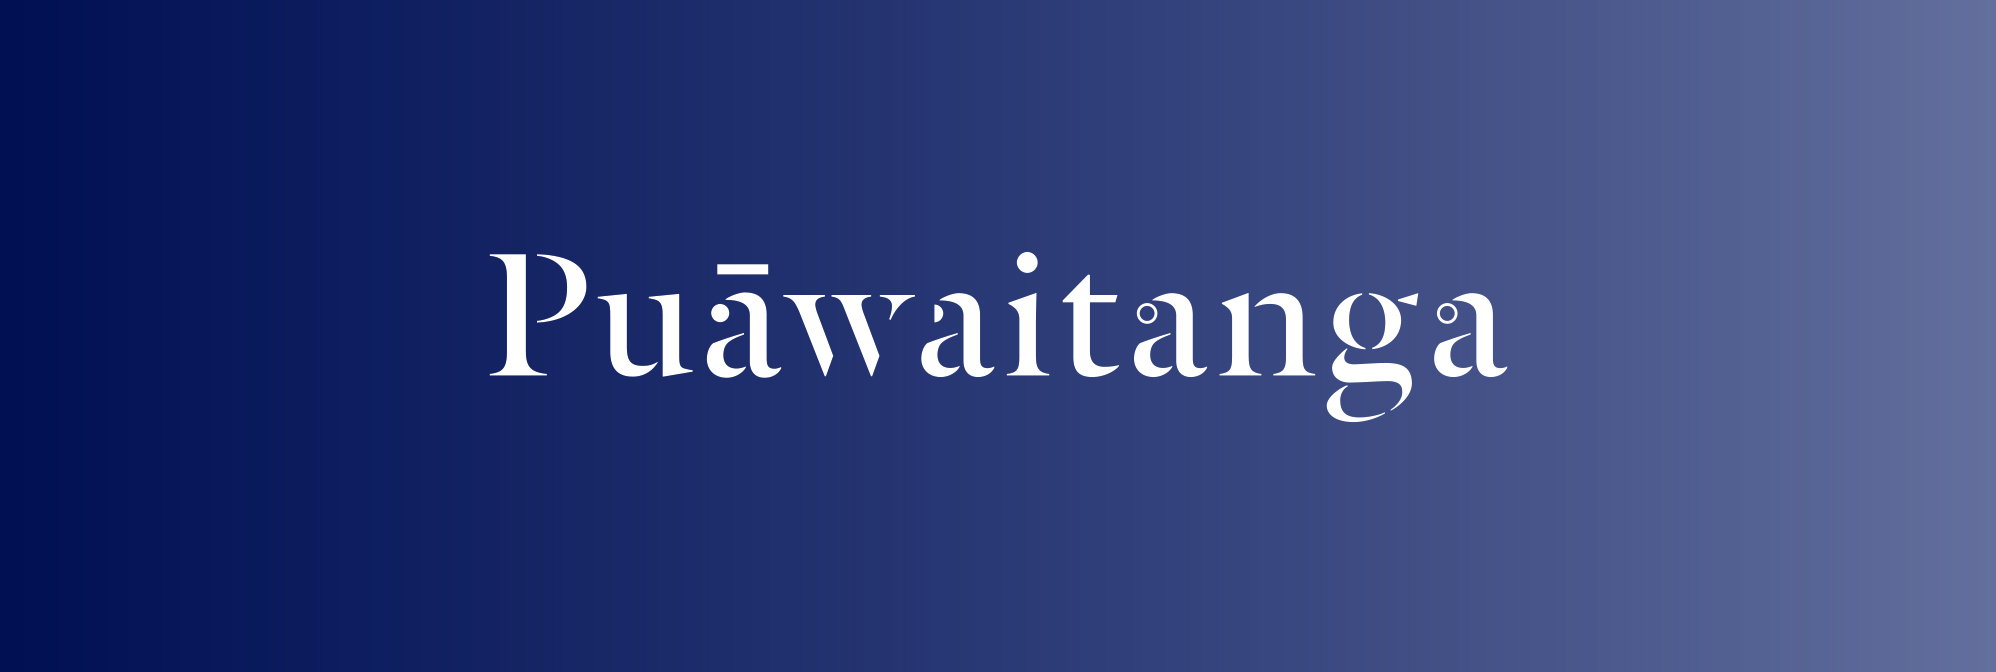 Puawaitanga project image